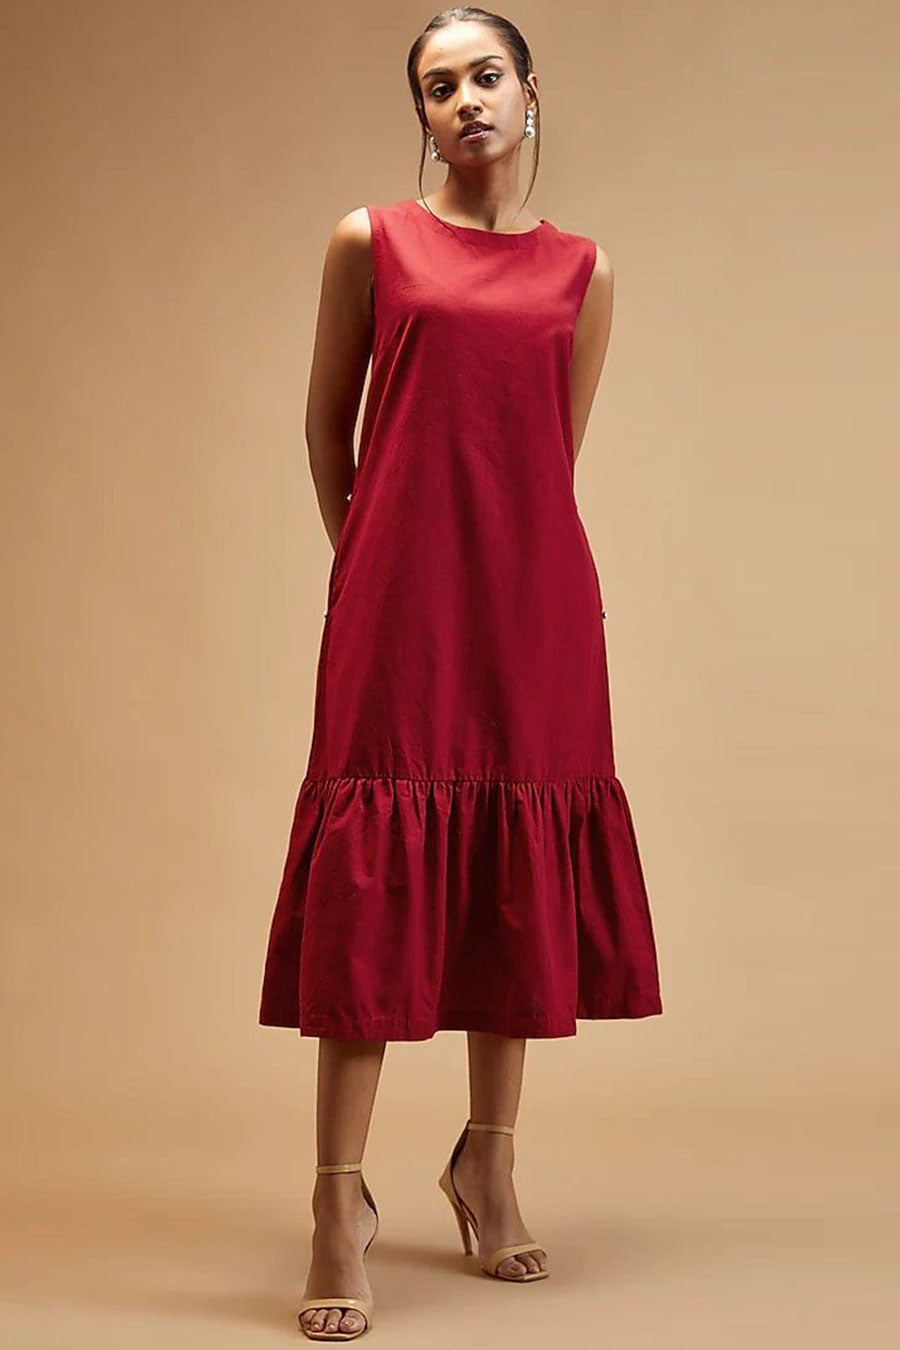 Scarlet Red Sleeveless Dress